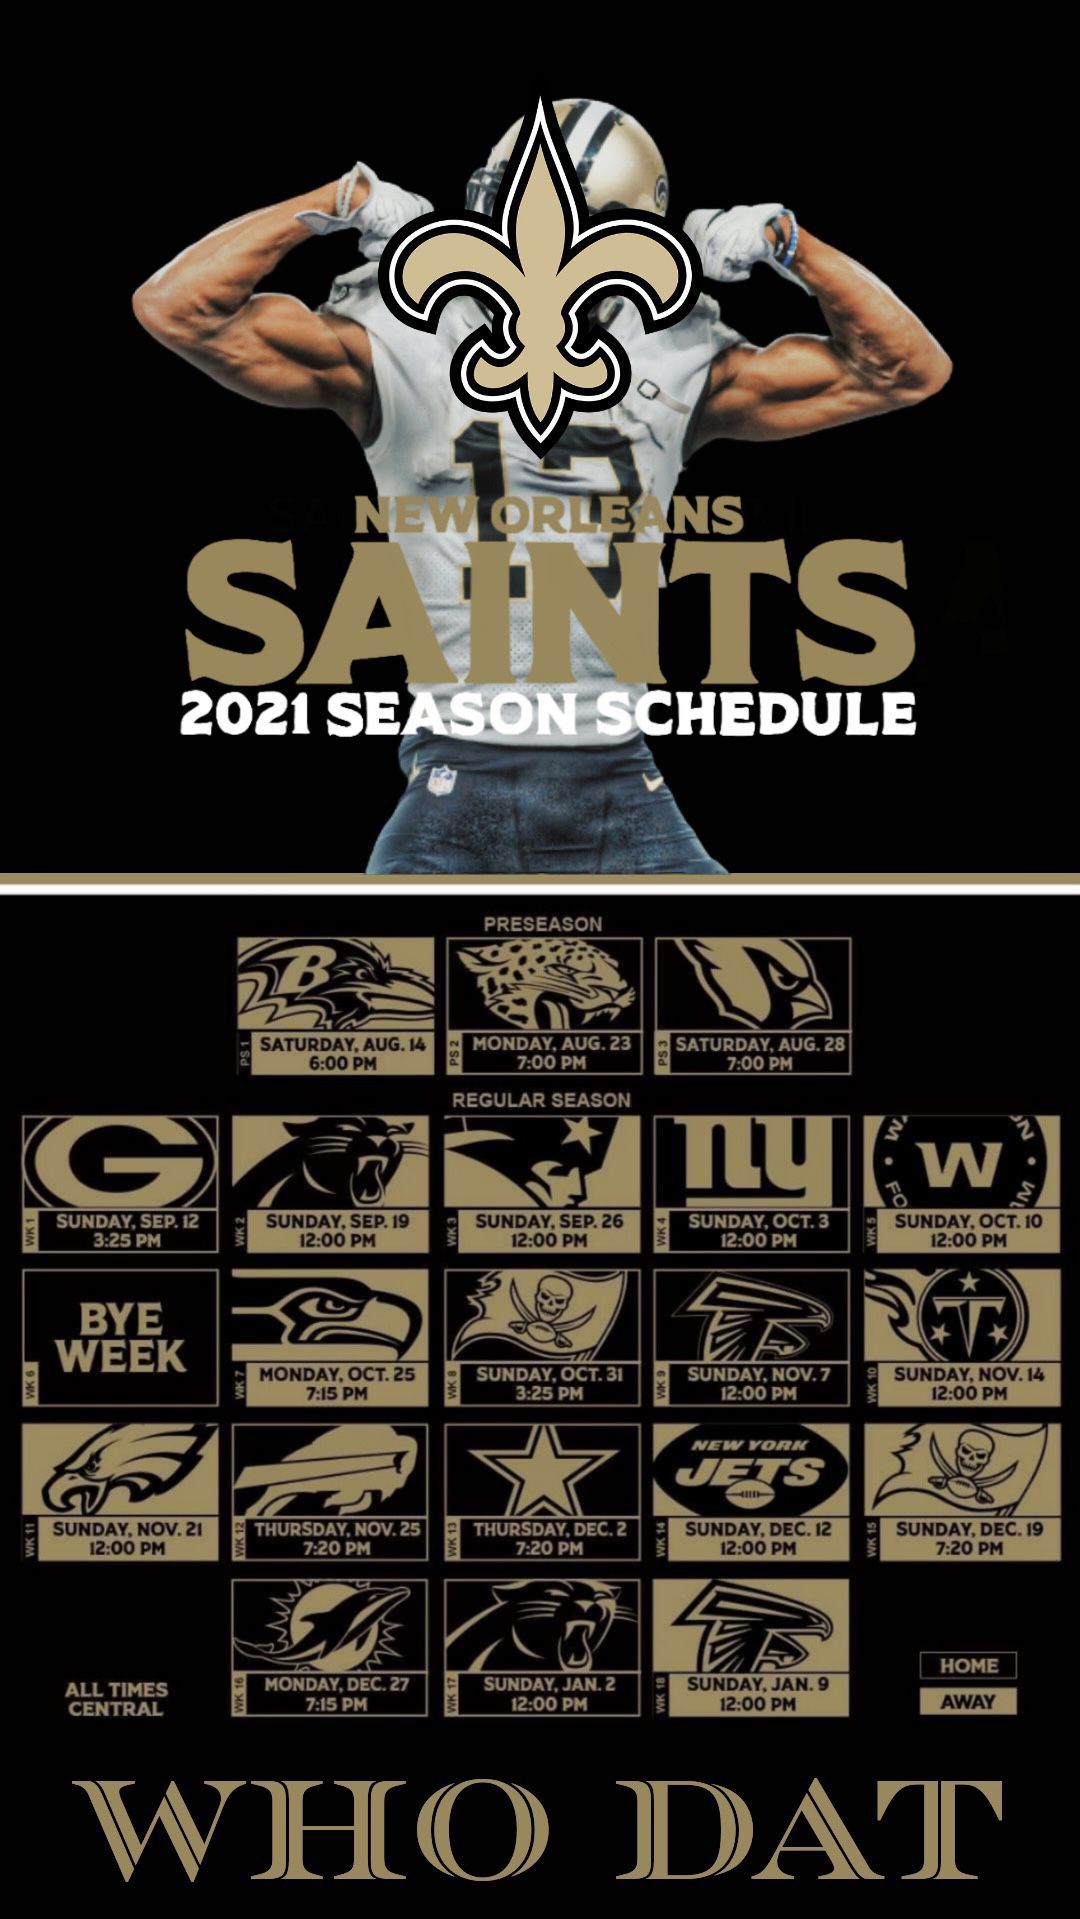 New Orleans Saints 2021 Season Tickets